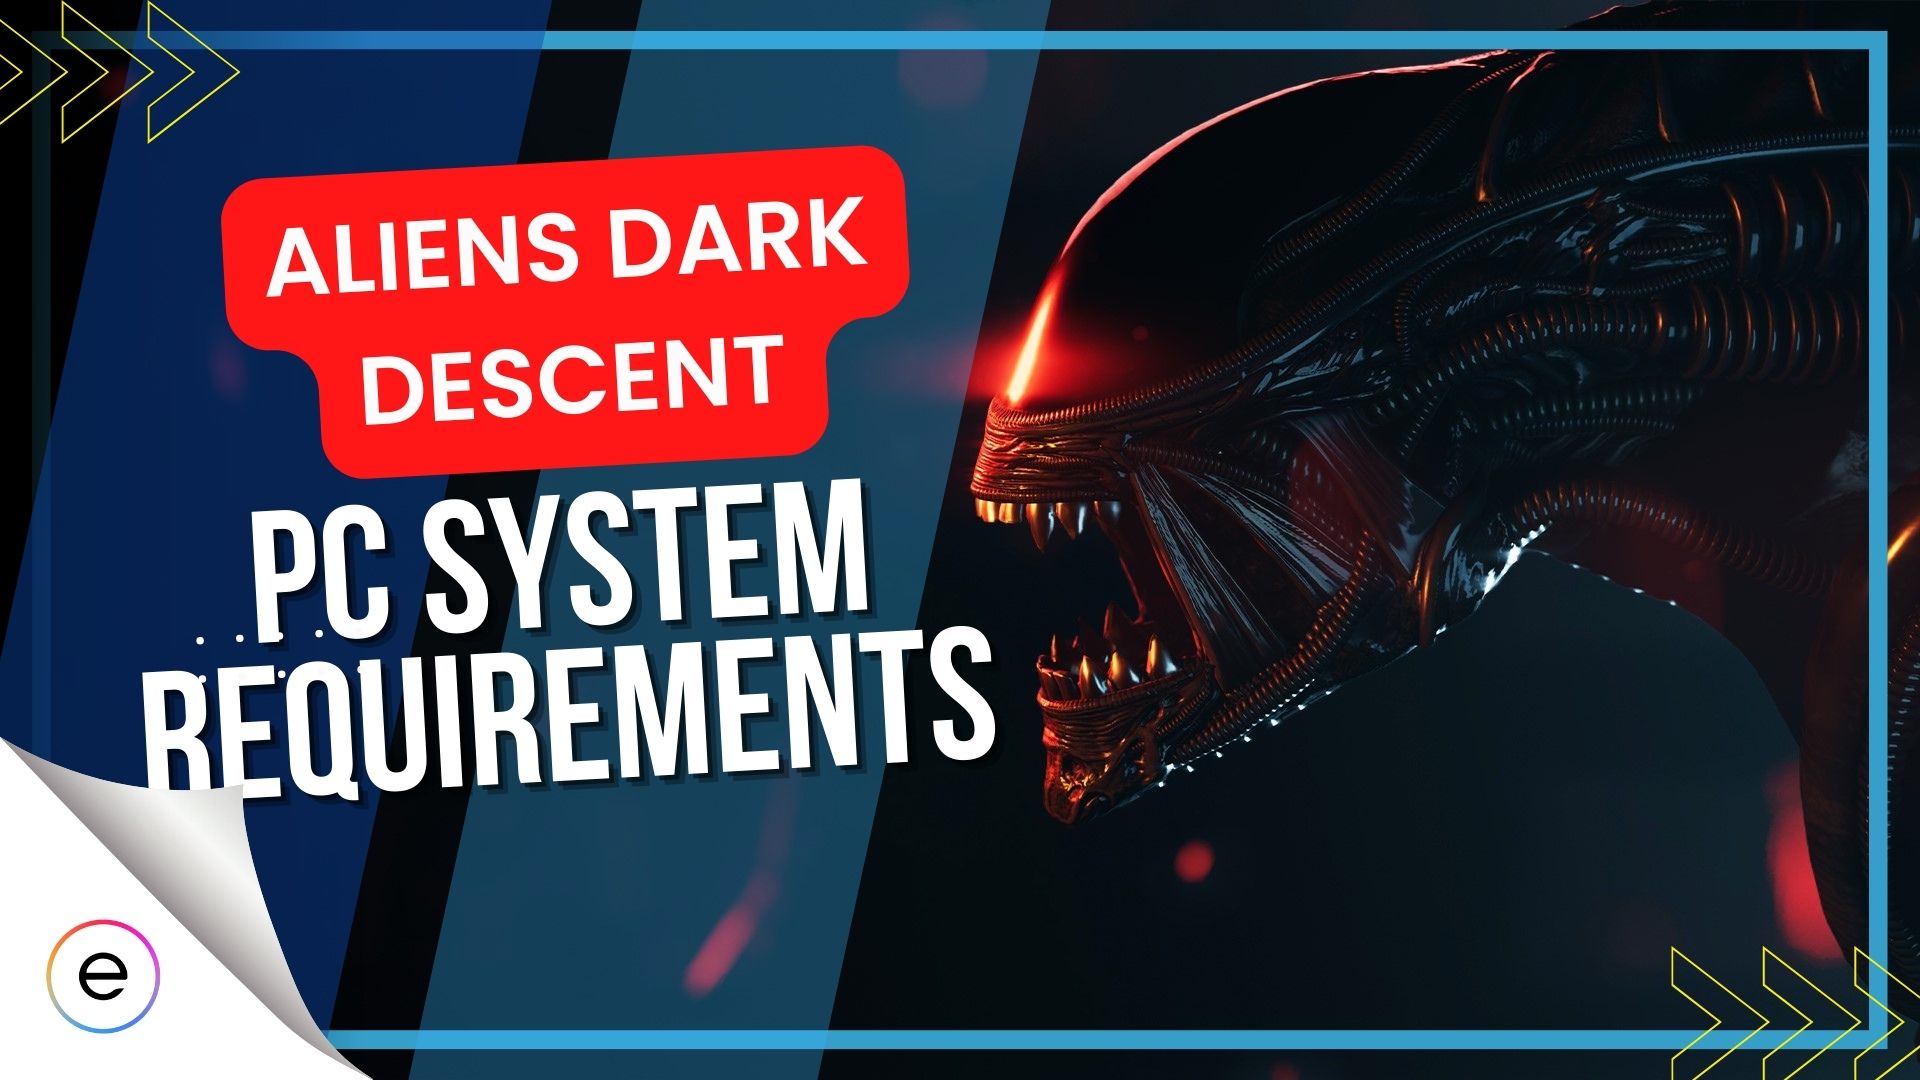 Aliens Dark Descent: OC System Requirement